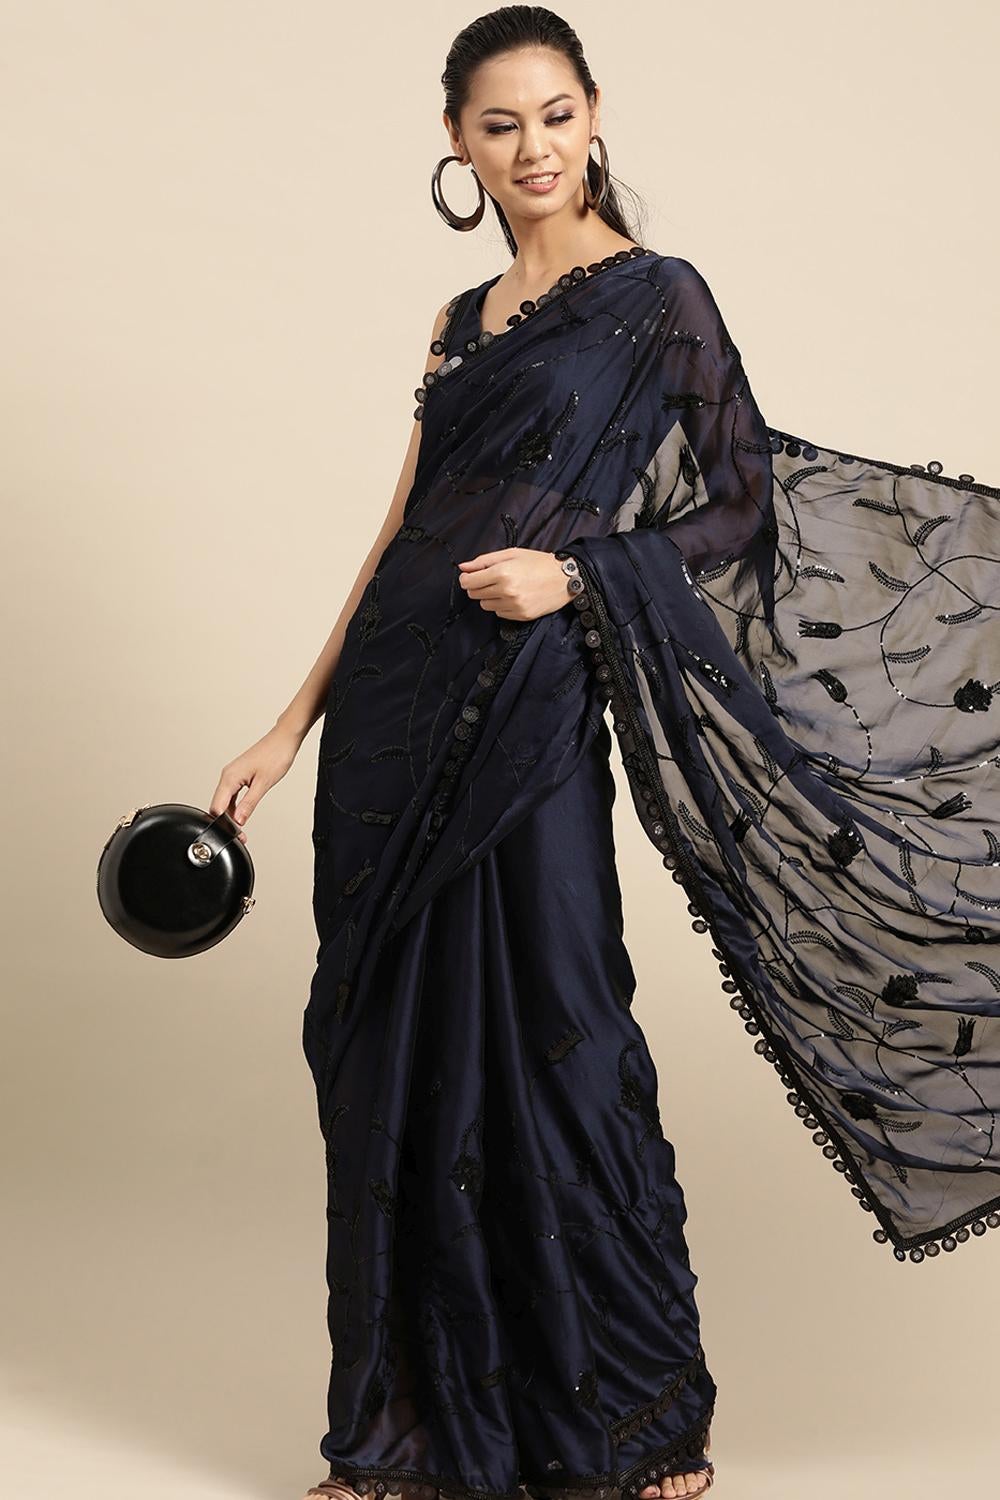 18004 multi style readymade saree one minut saree water - Reewaz  International